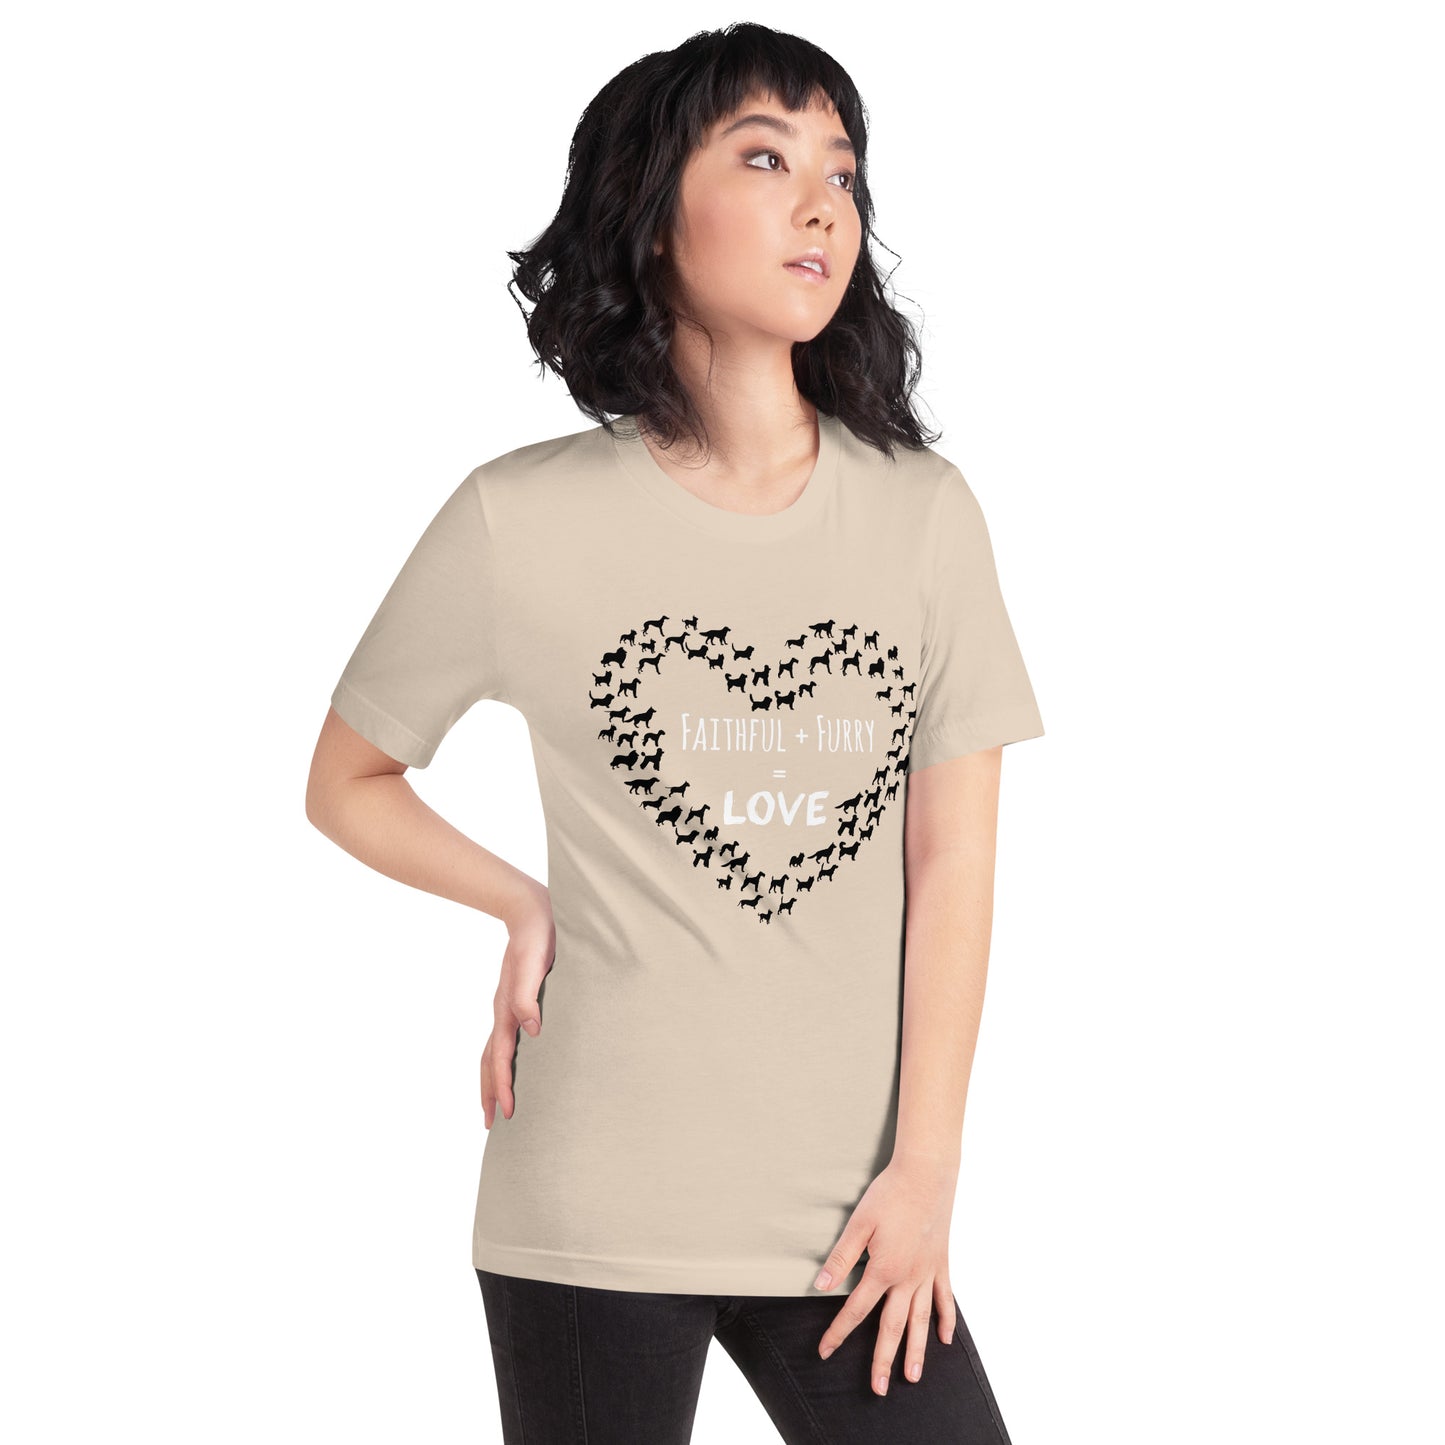 Faithful + Furry = Love  t-shirt light colors